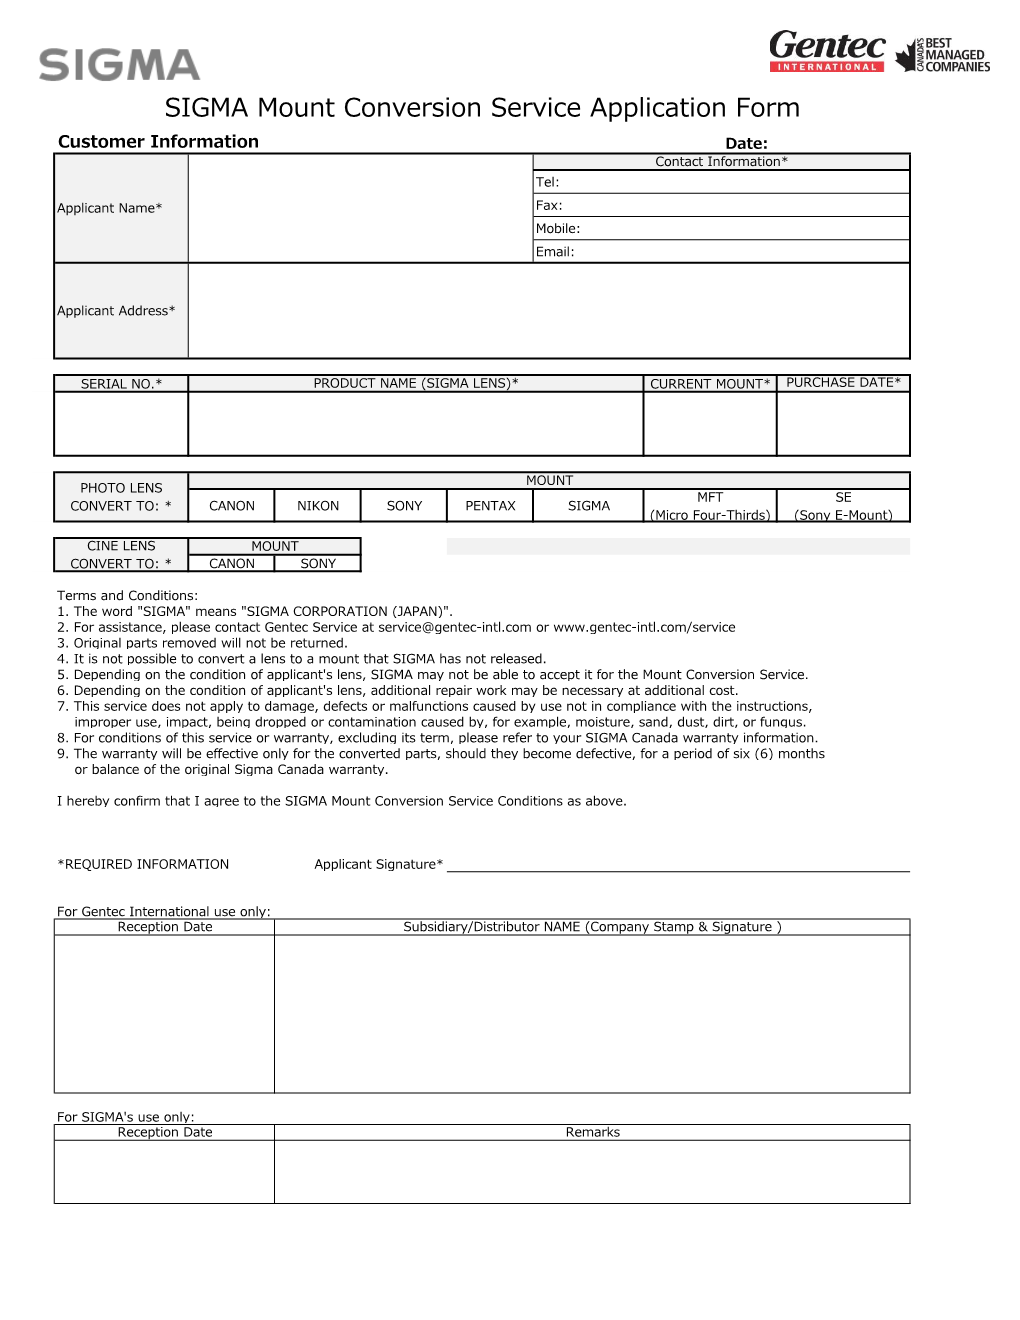 SIGMA Mount Conversion Service Application Form